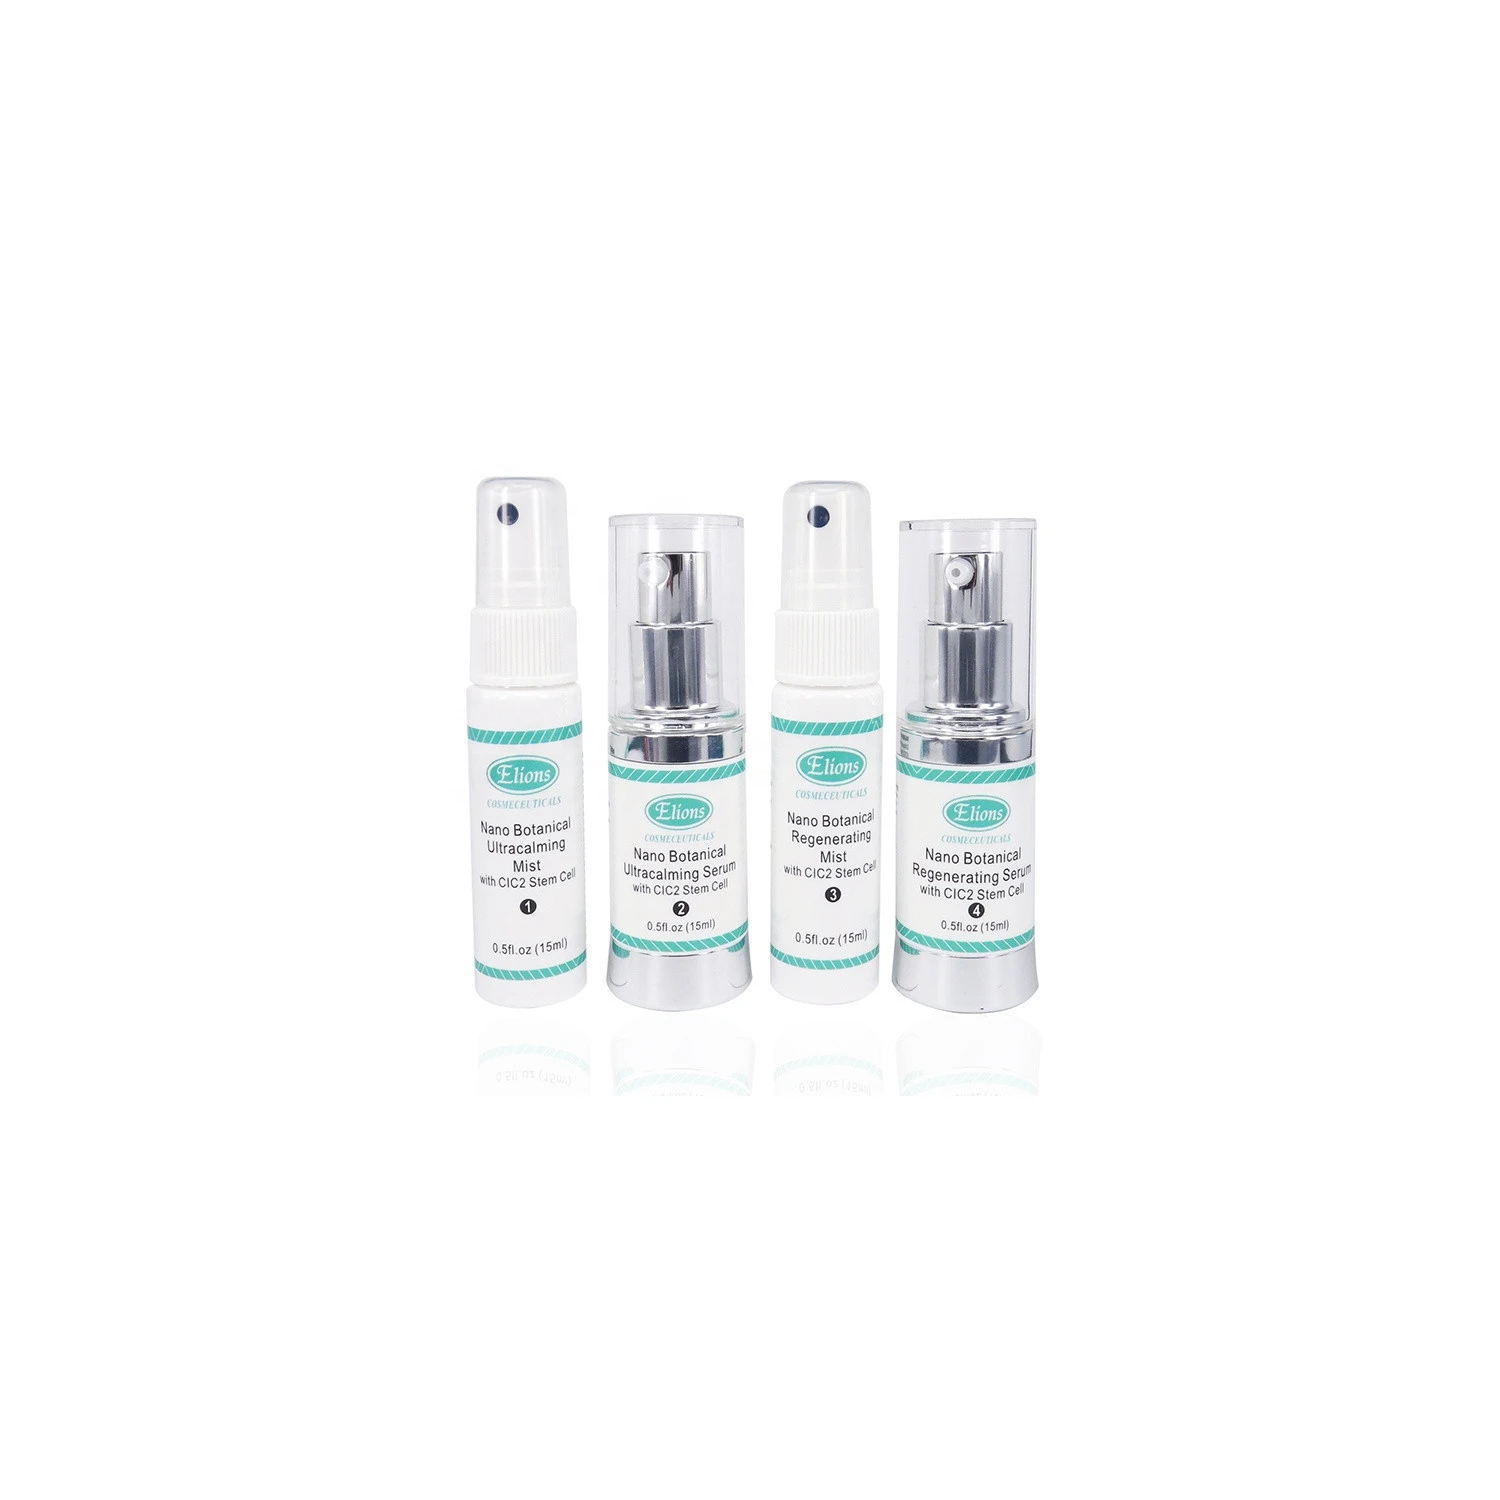 Elionsrx Cosmeceutical skin care nano spray healing herbs beauty facial care set